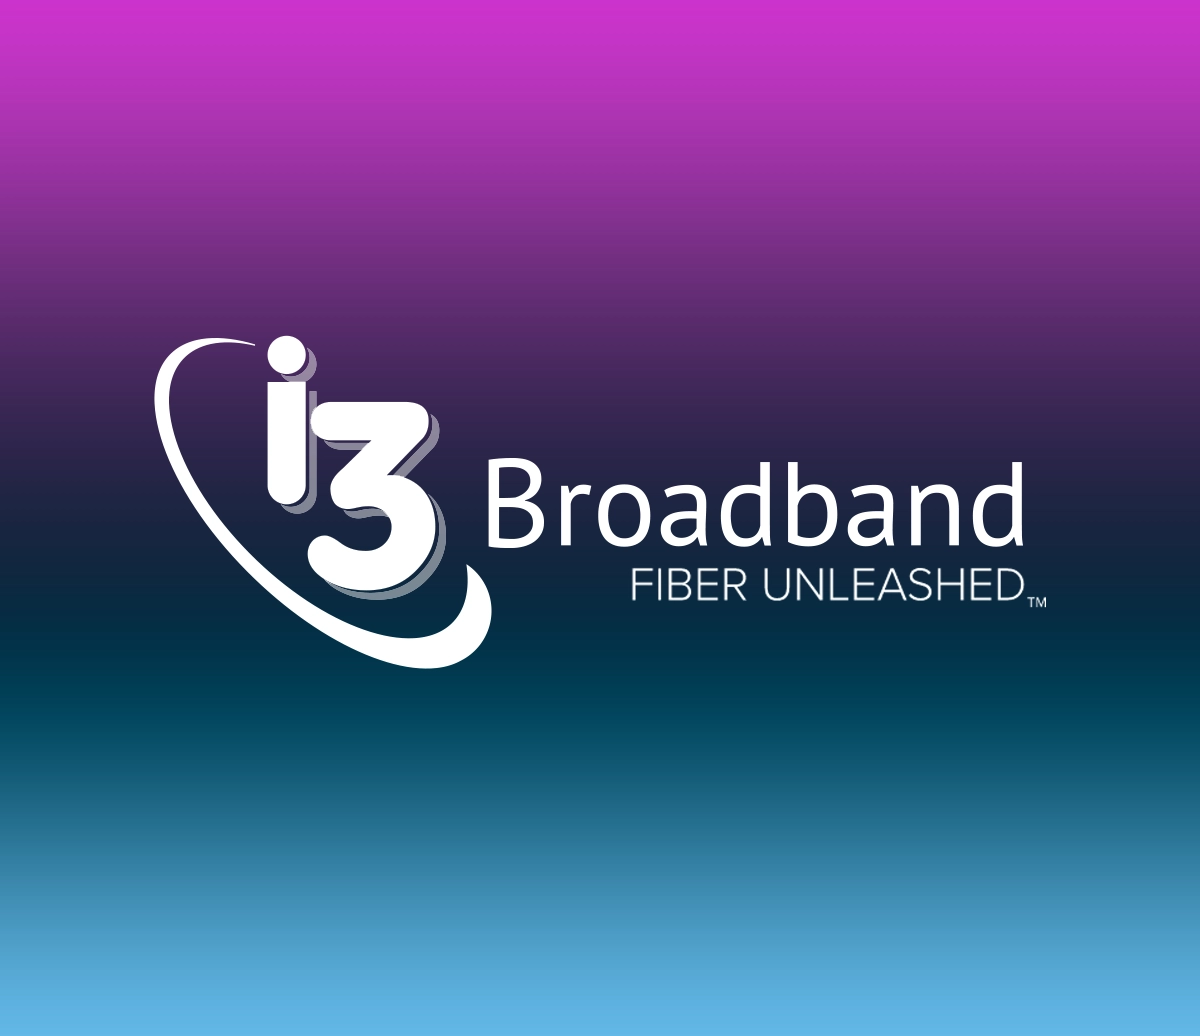 i3_broadband